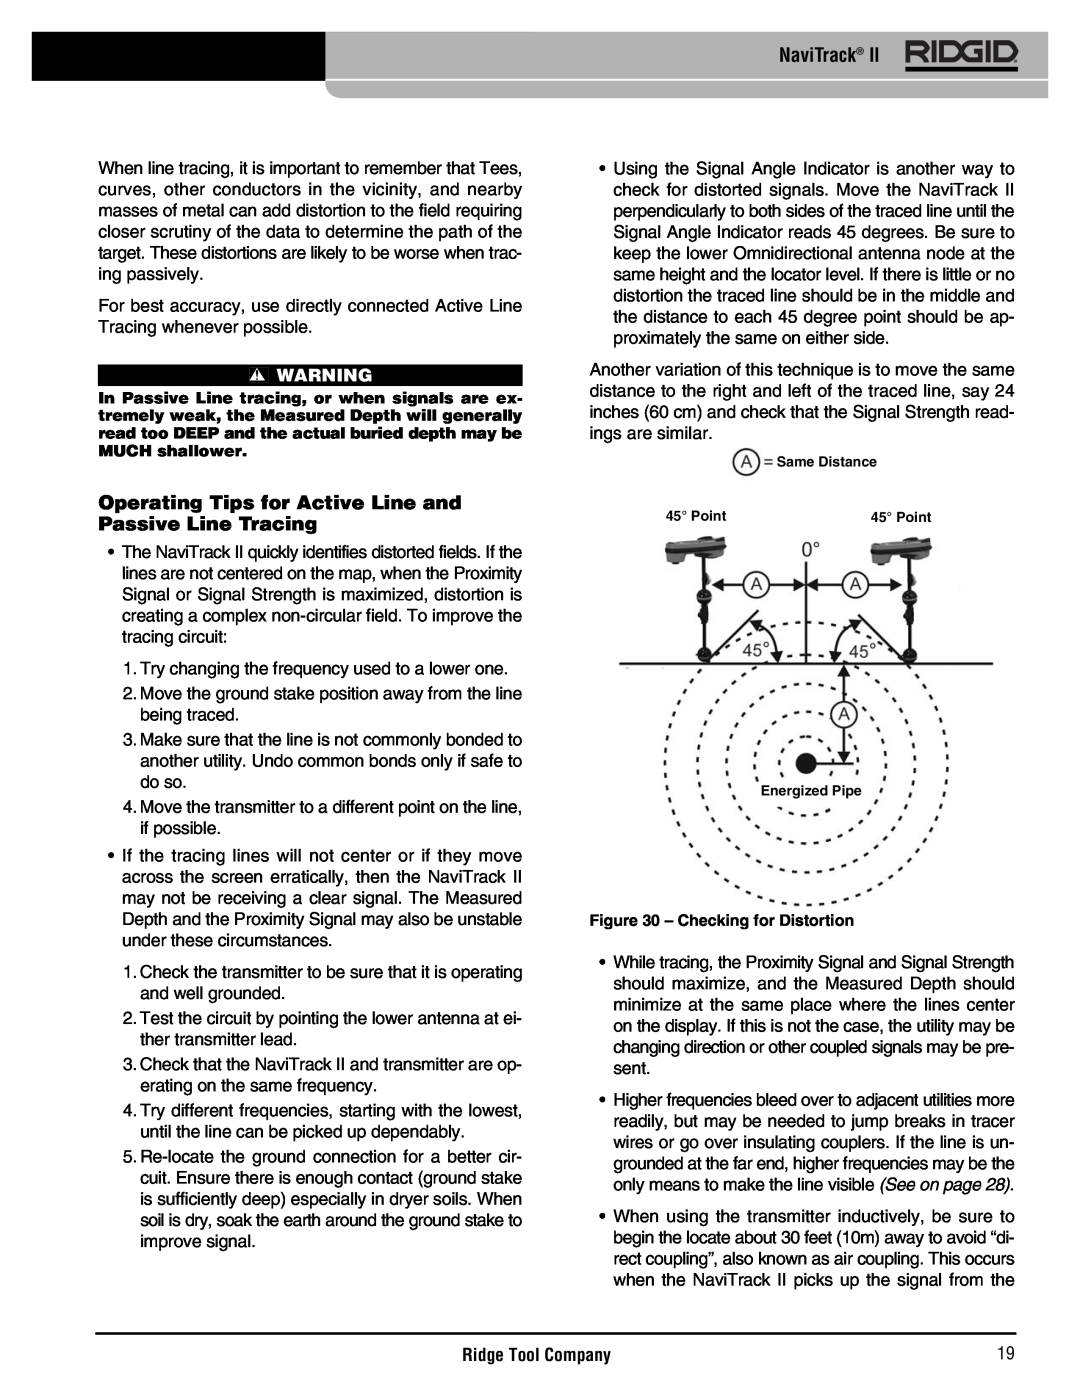 RIDGID Metal Detector manual Operating Tips for Active Line and Passive Line Tracing, NaviTrack, Ridge Tool Company 